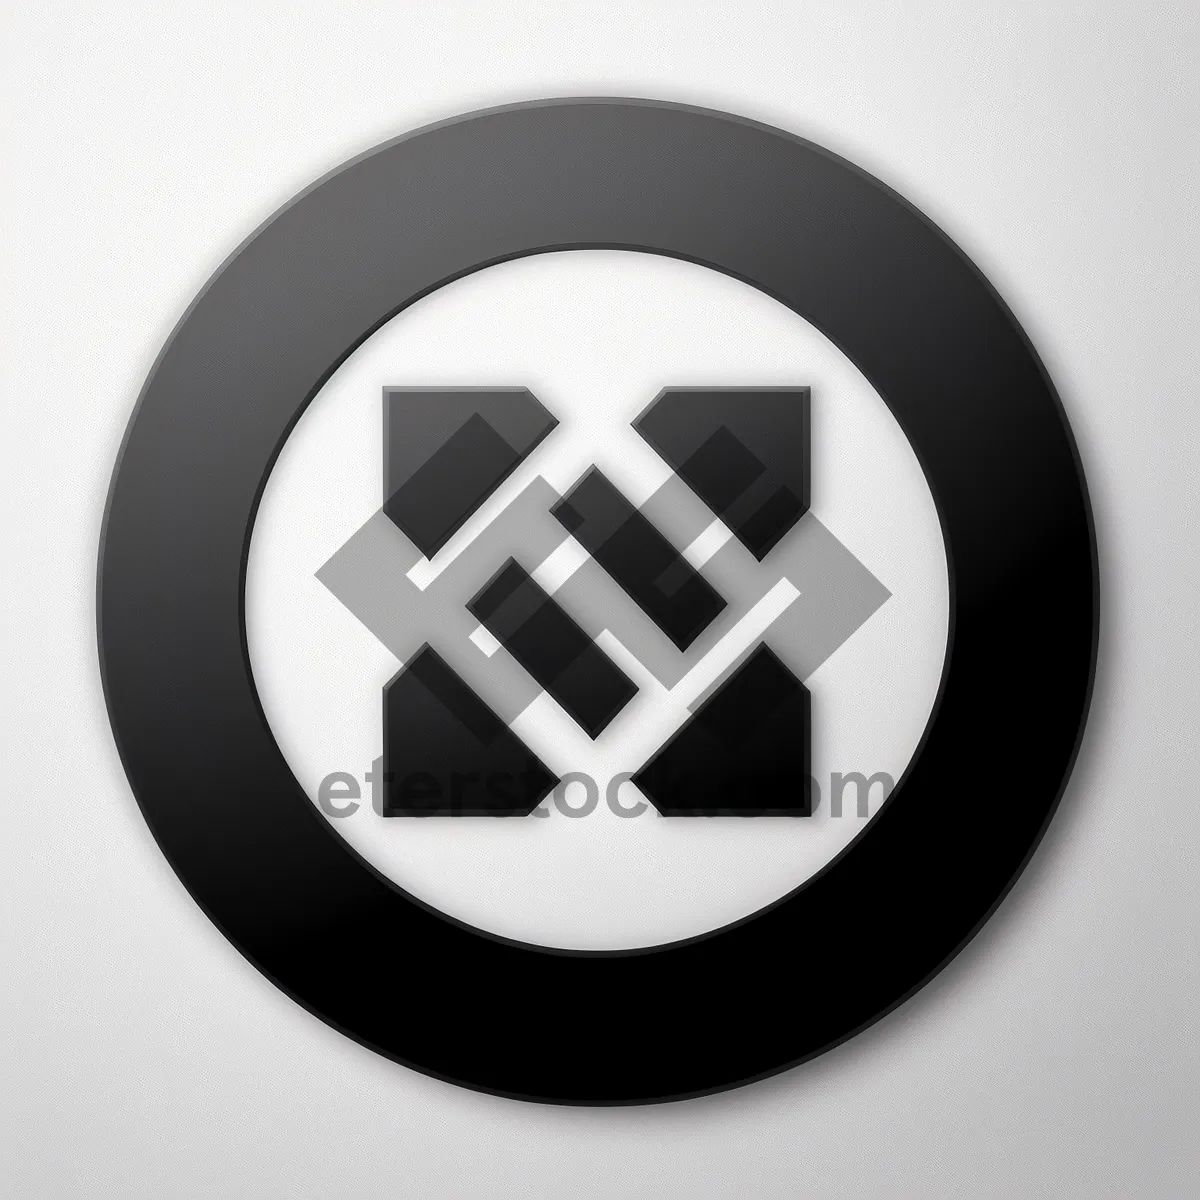 Picture of Round Metallic Button Icon - Shiny Black Business Symbol